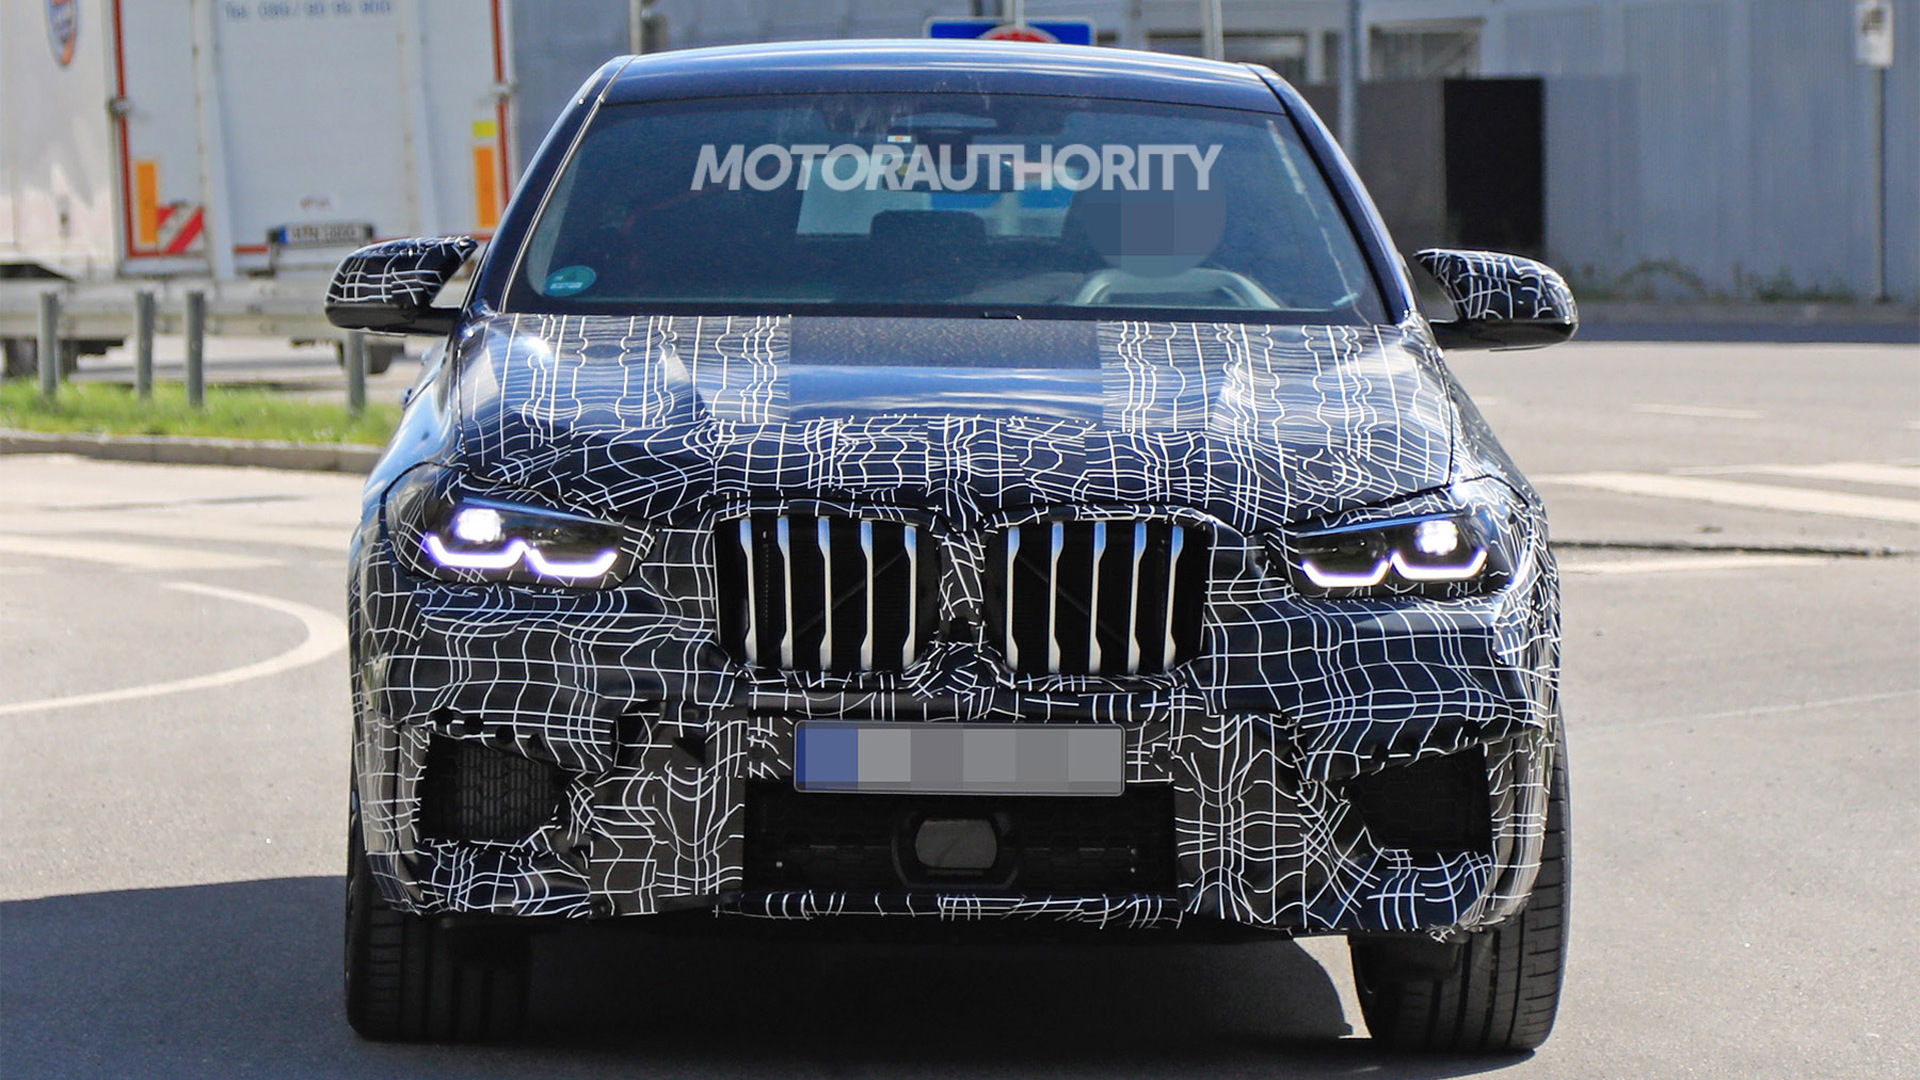 2020 BMW X6 M spy shots - Image via S. Baldauf/SB-Medien